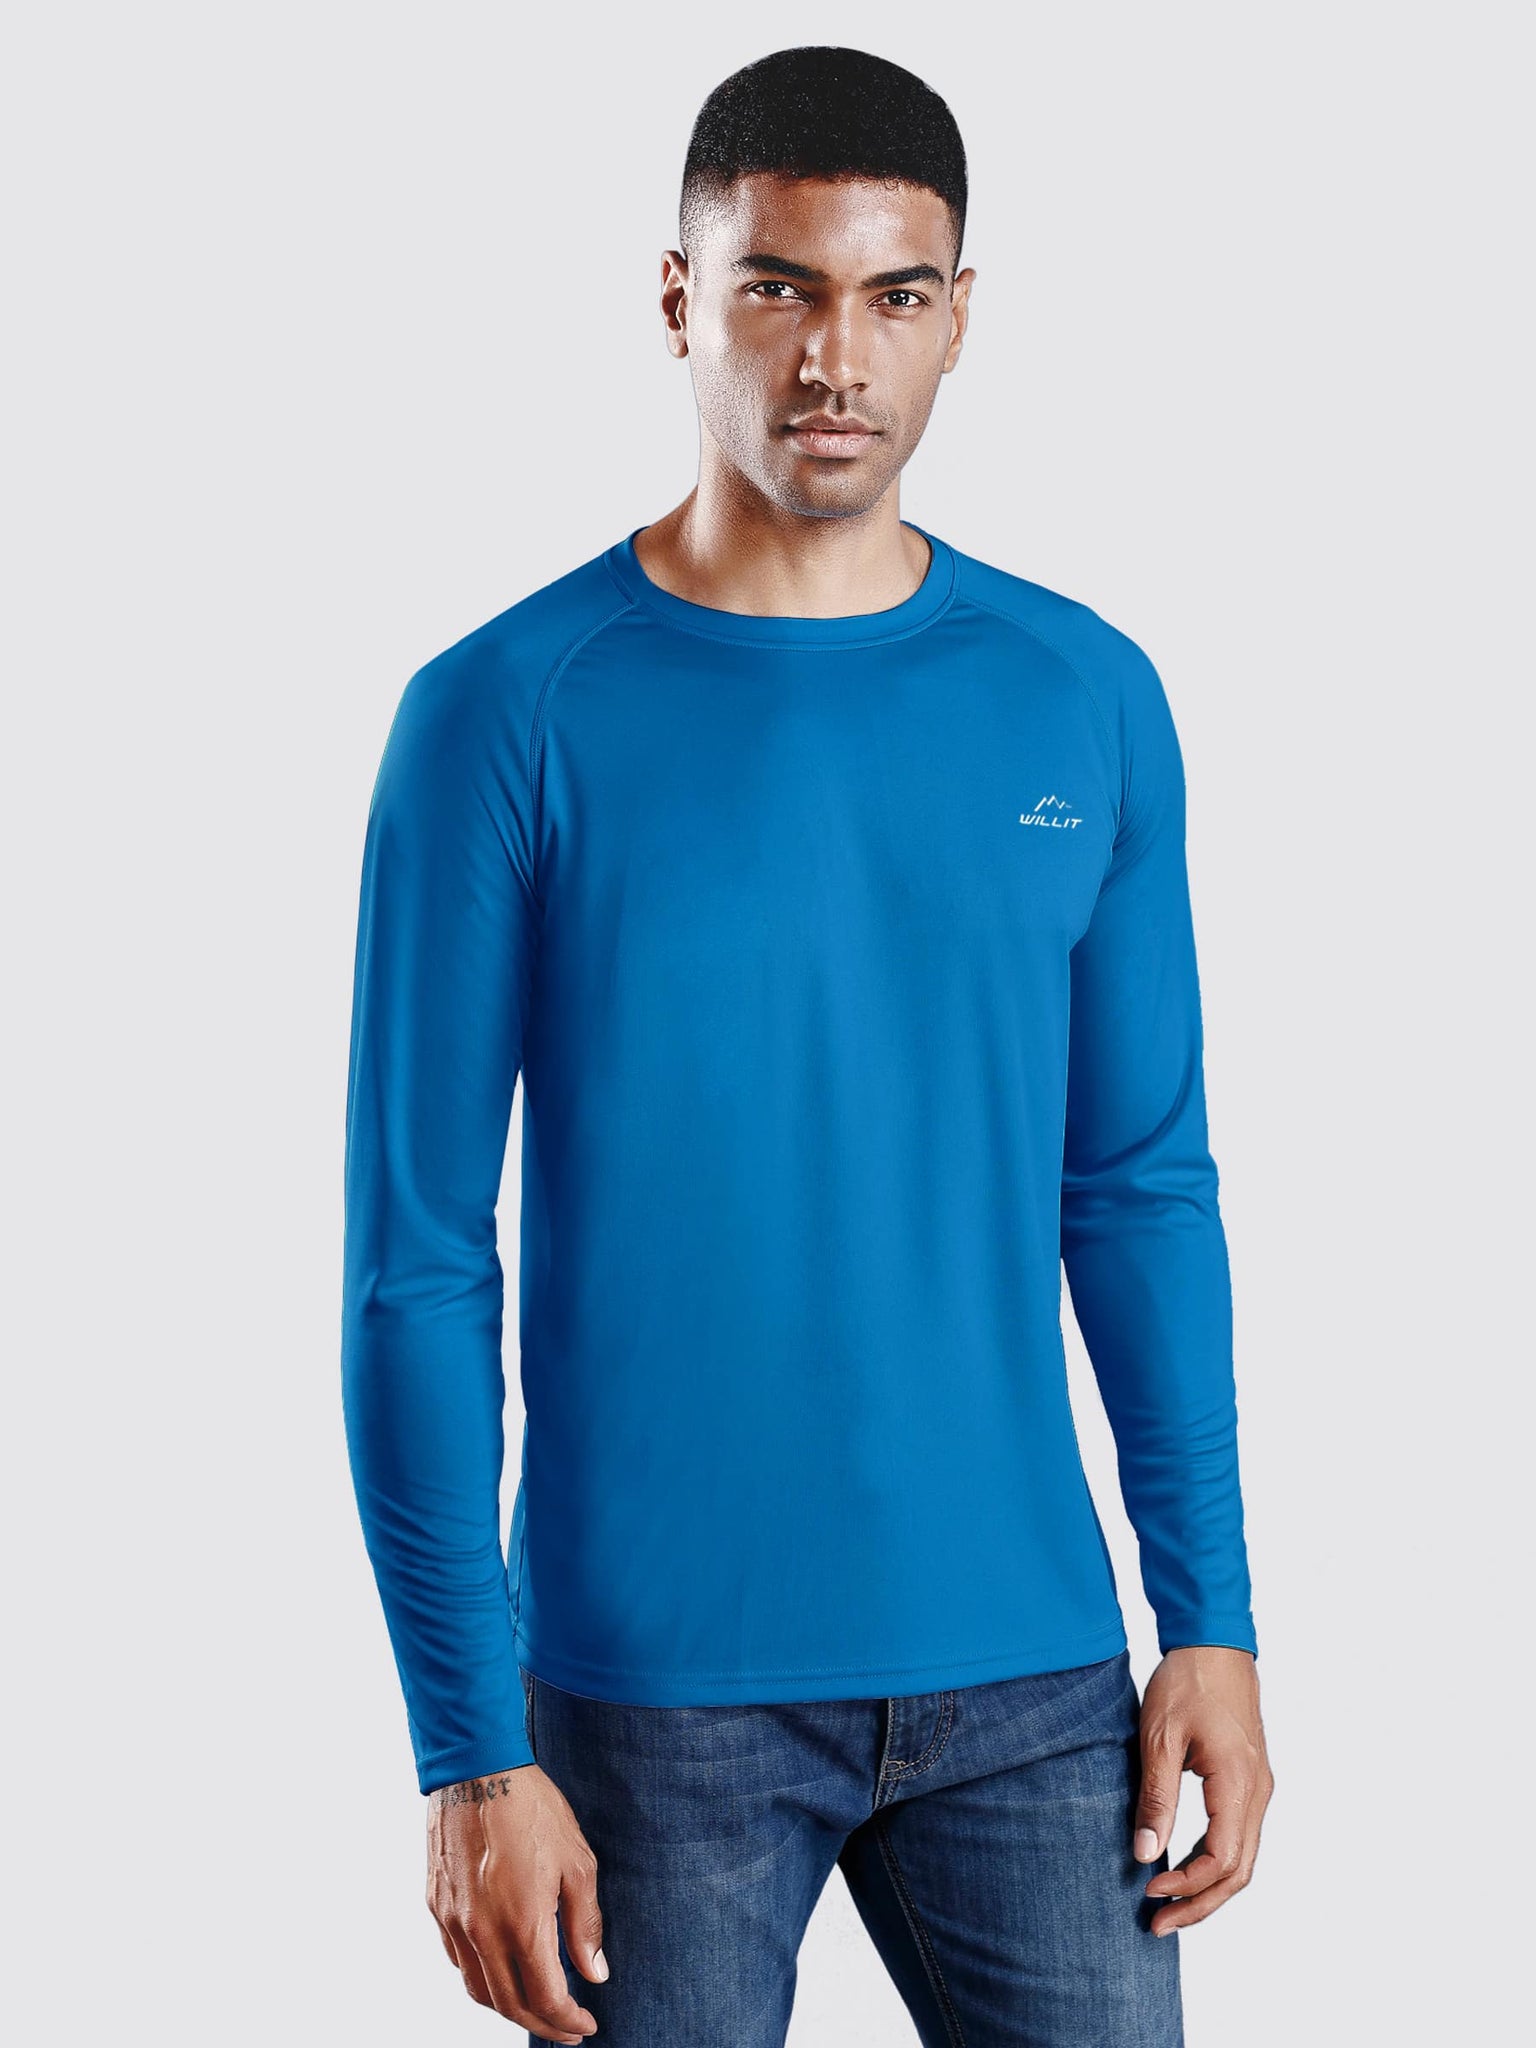 Willit Men's Sun Protection Long Sleeve Shirts_Brilliant Blue_model1